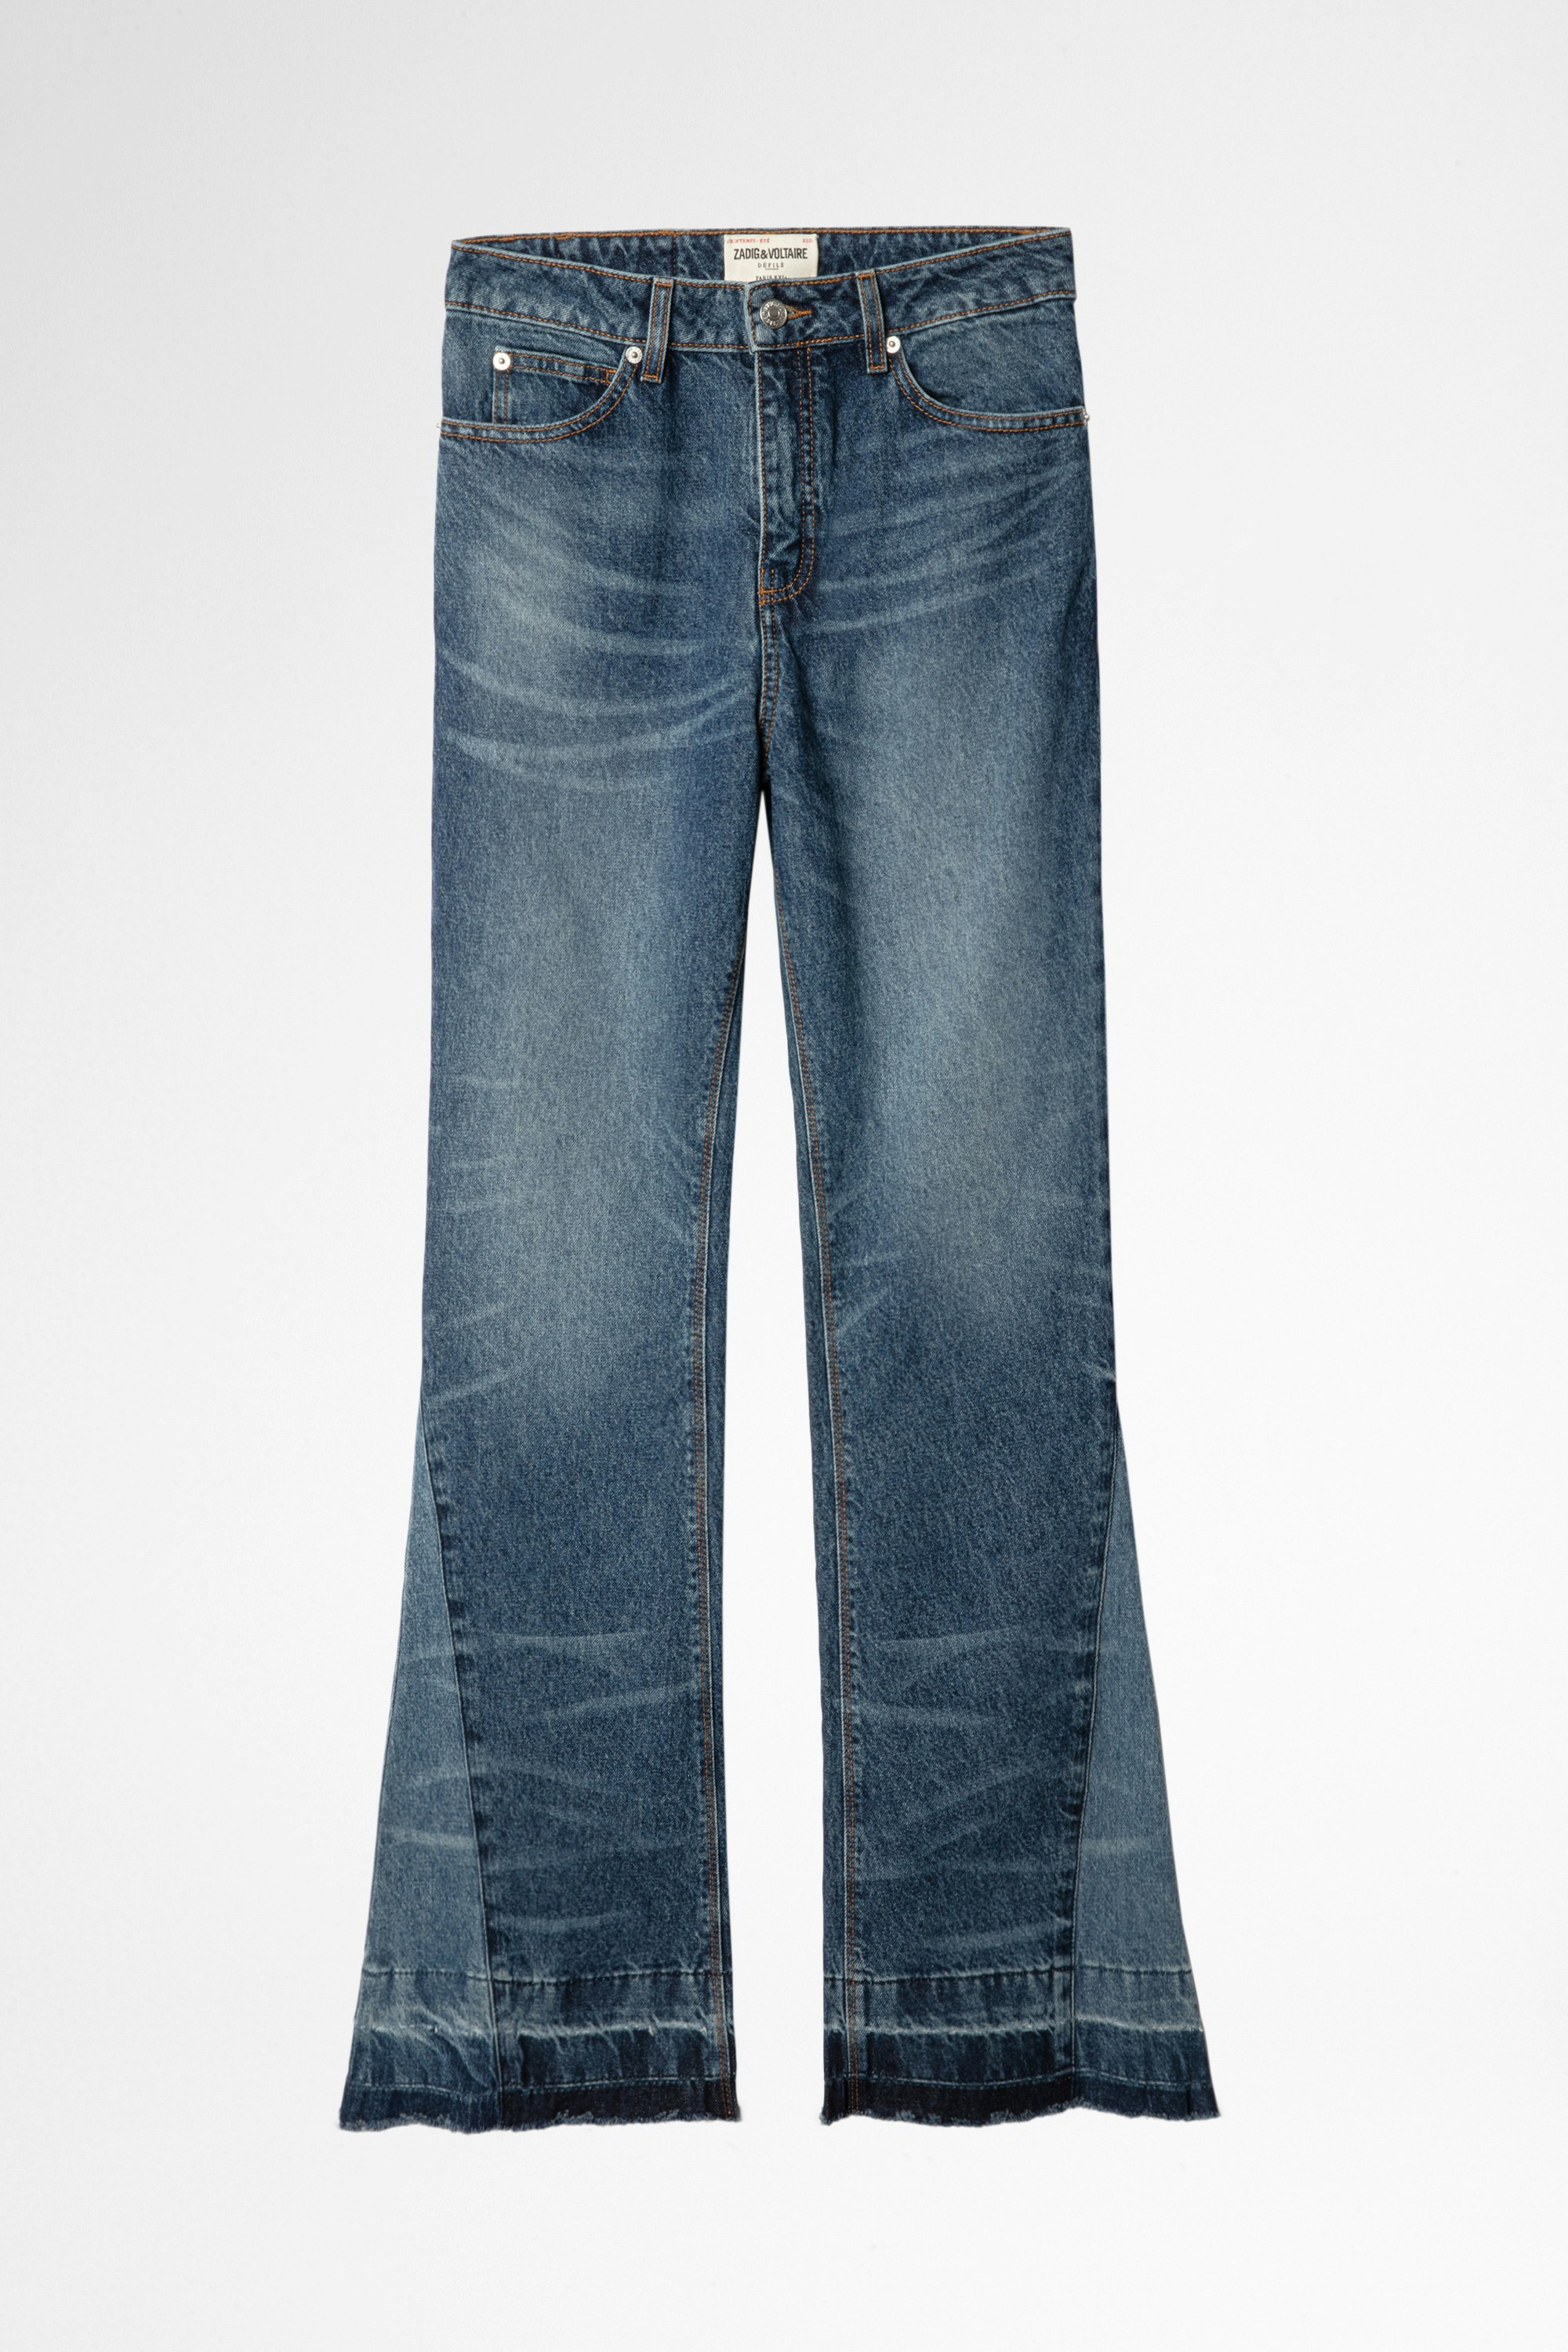 Jane B jeans